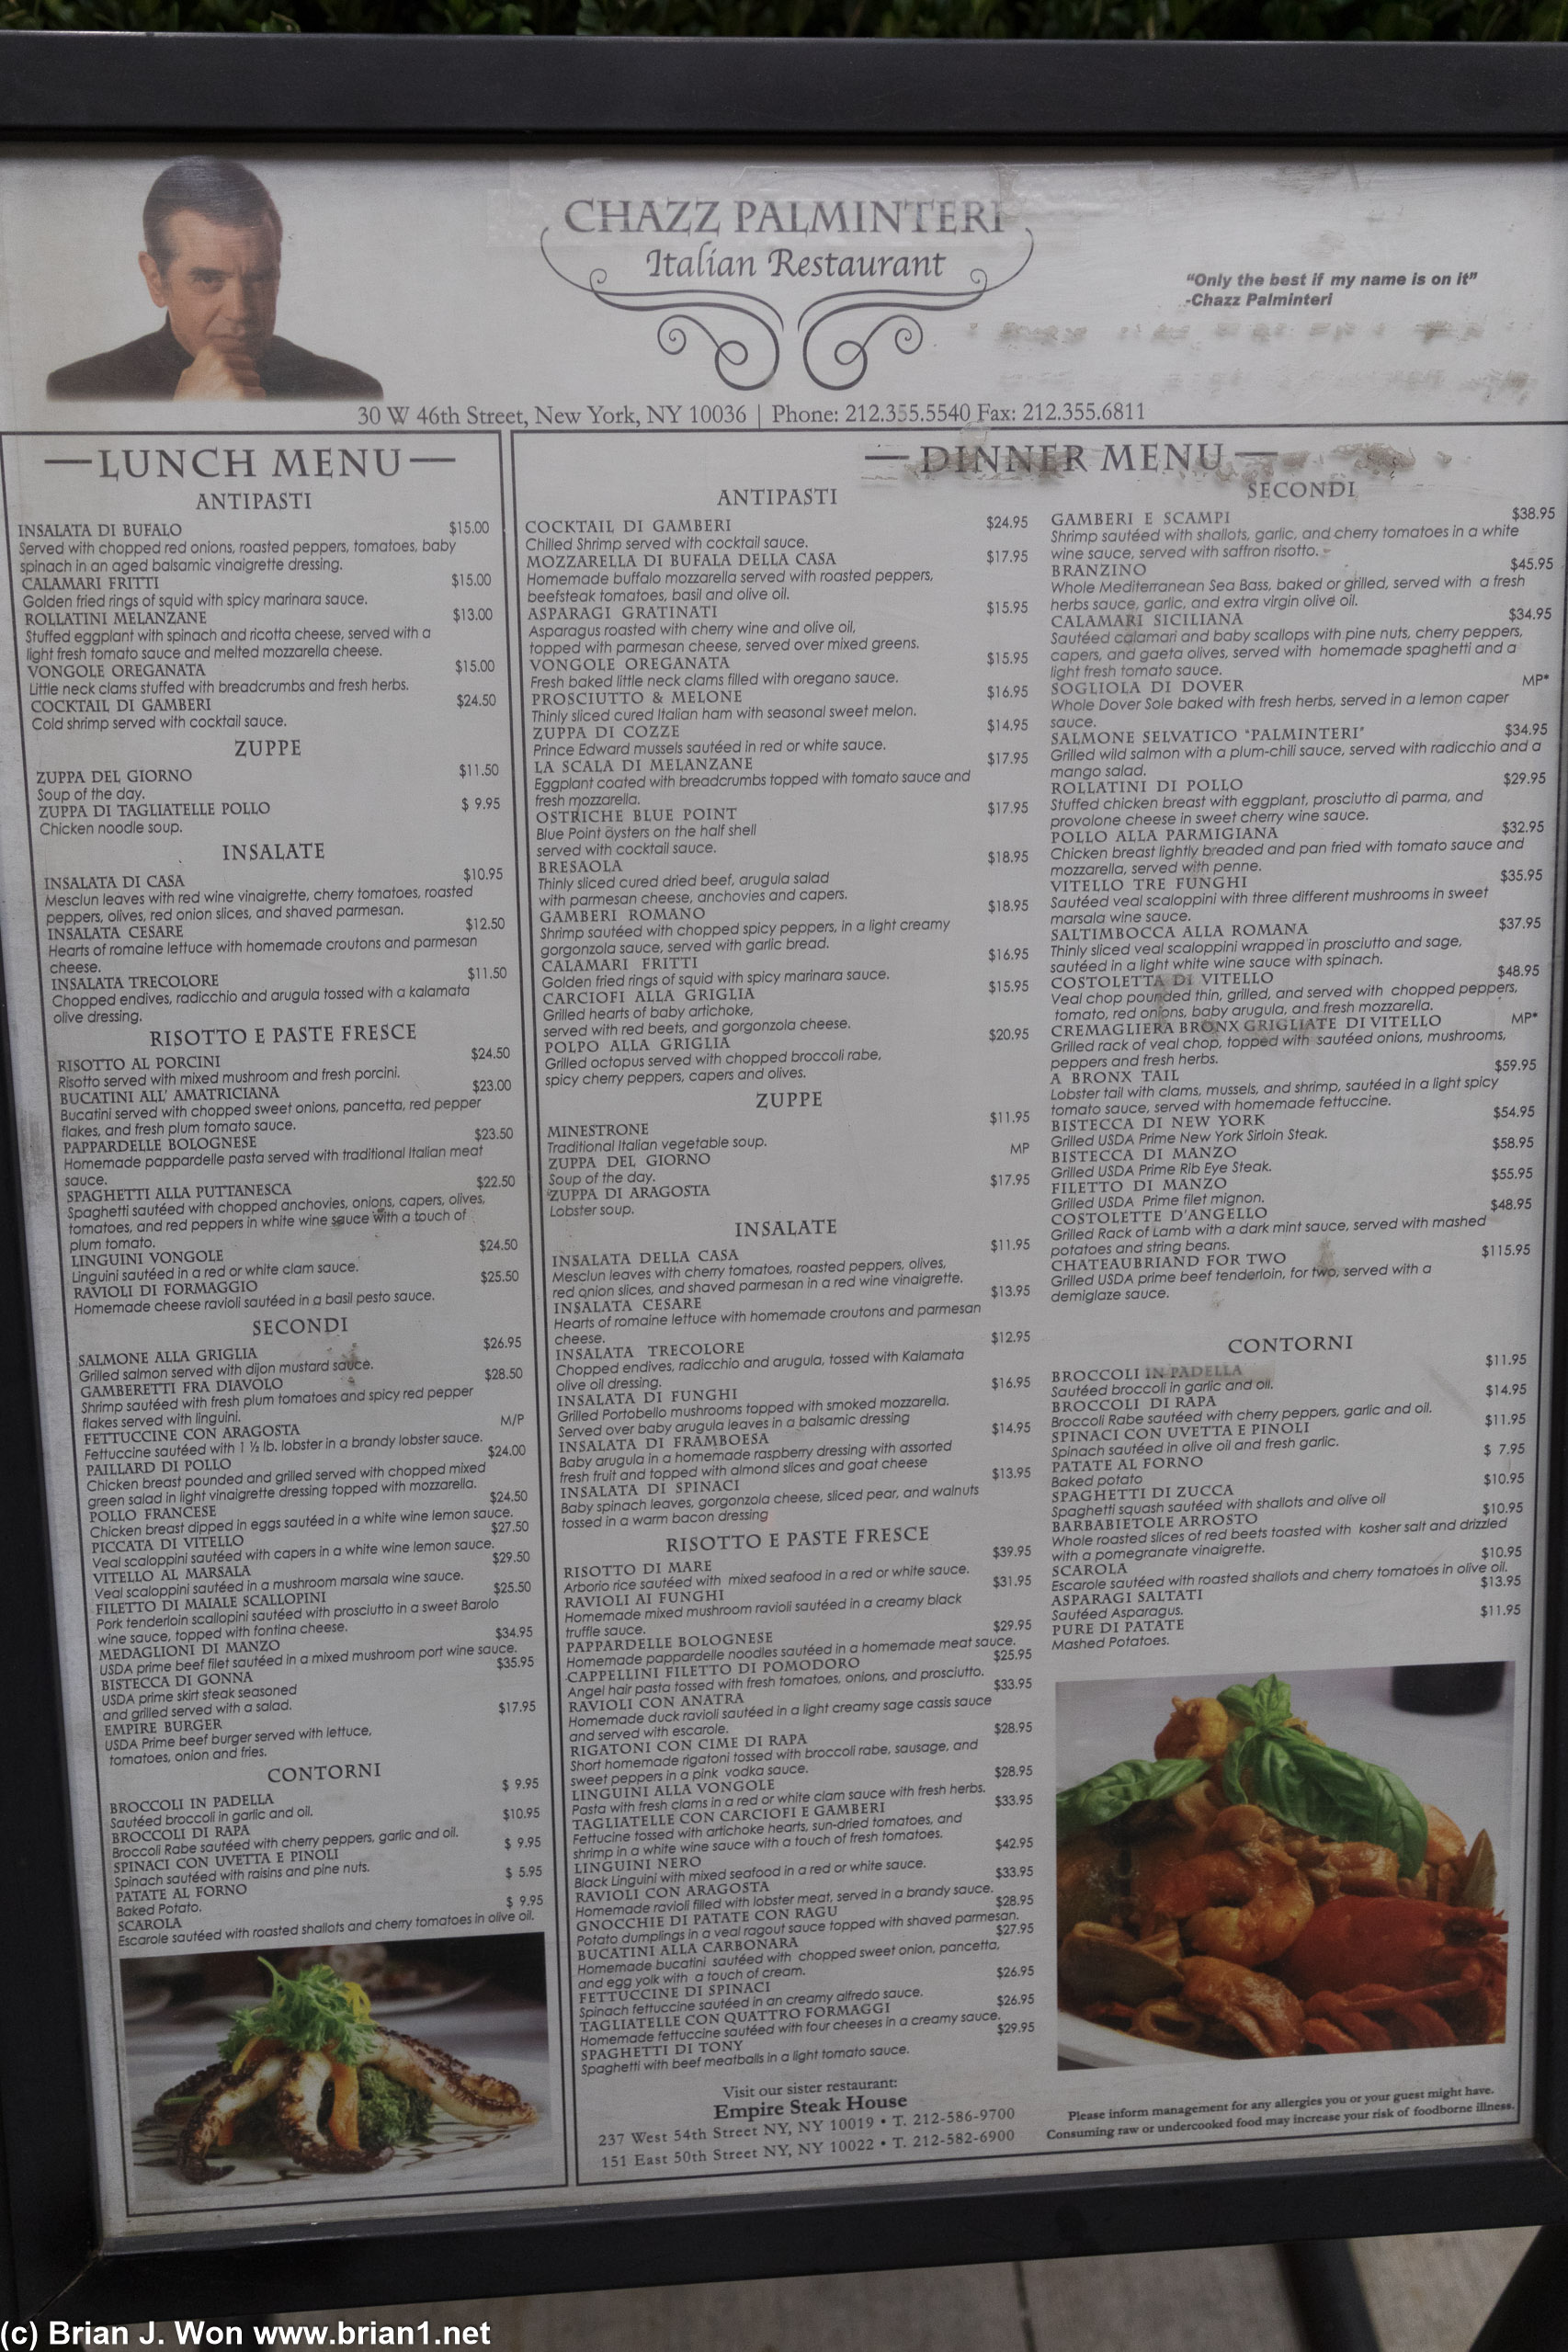 The menu at Chazz Palminteri.